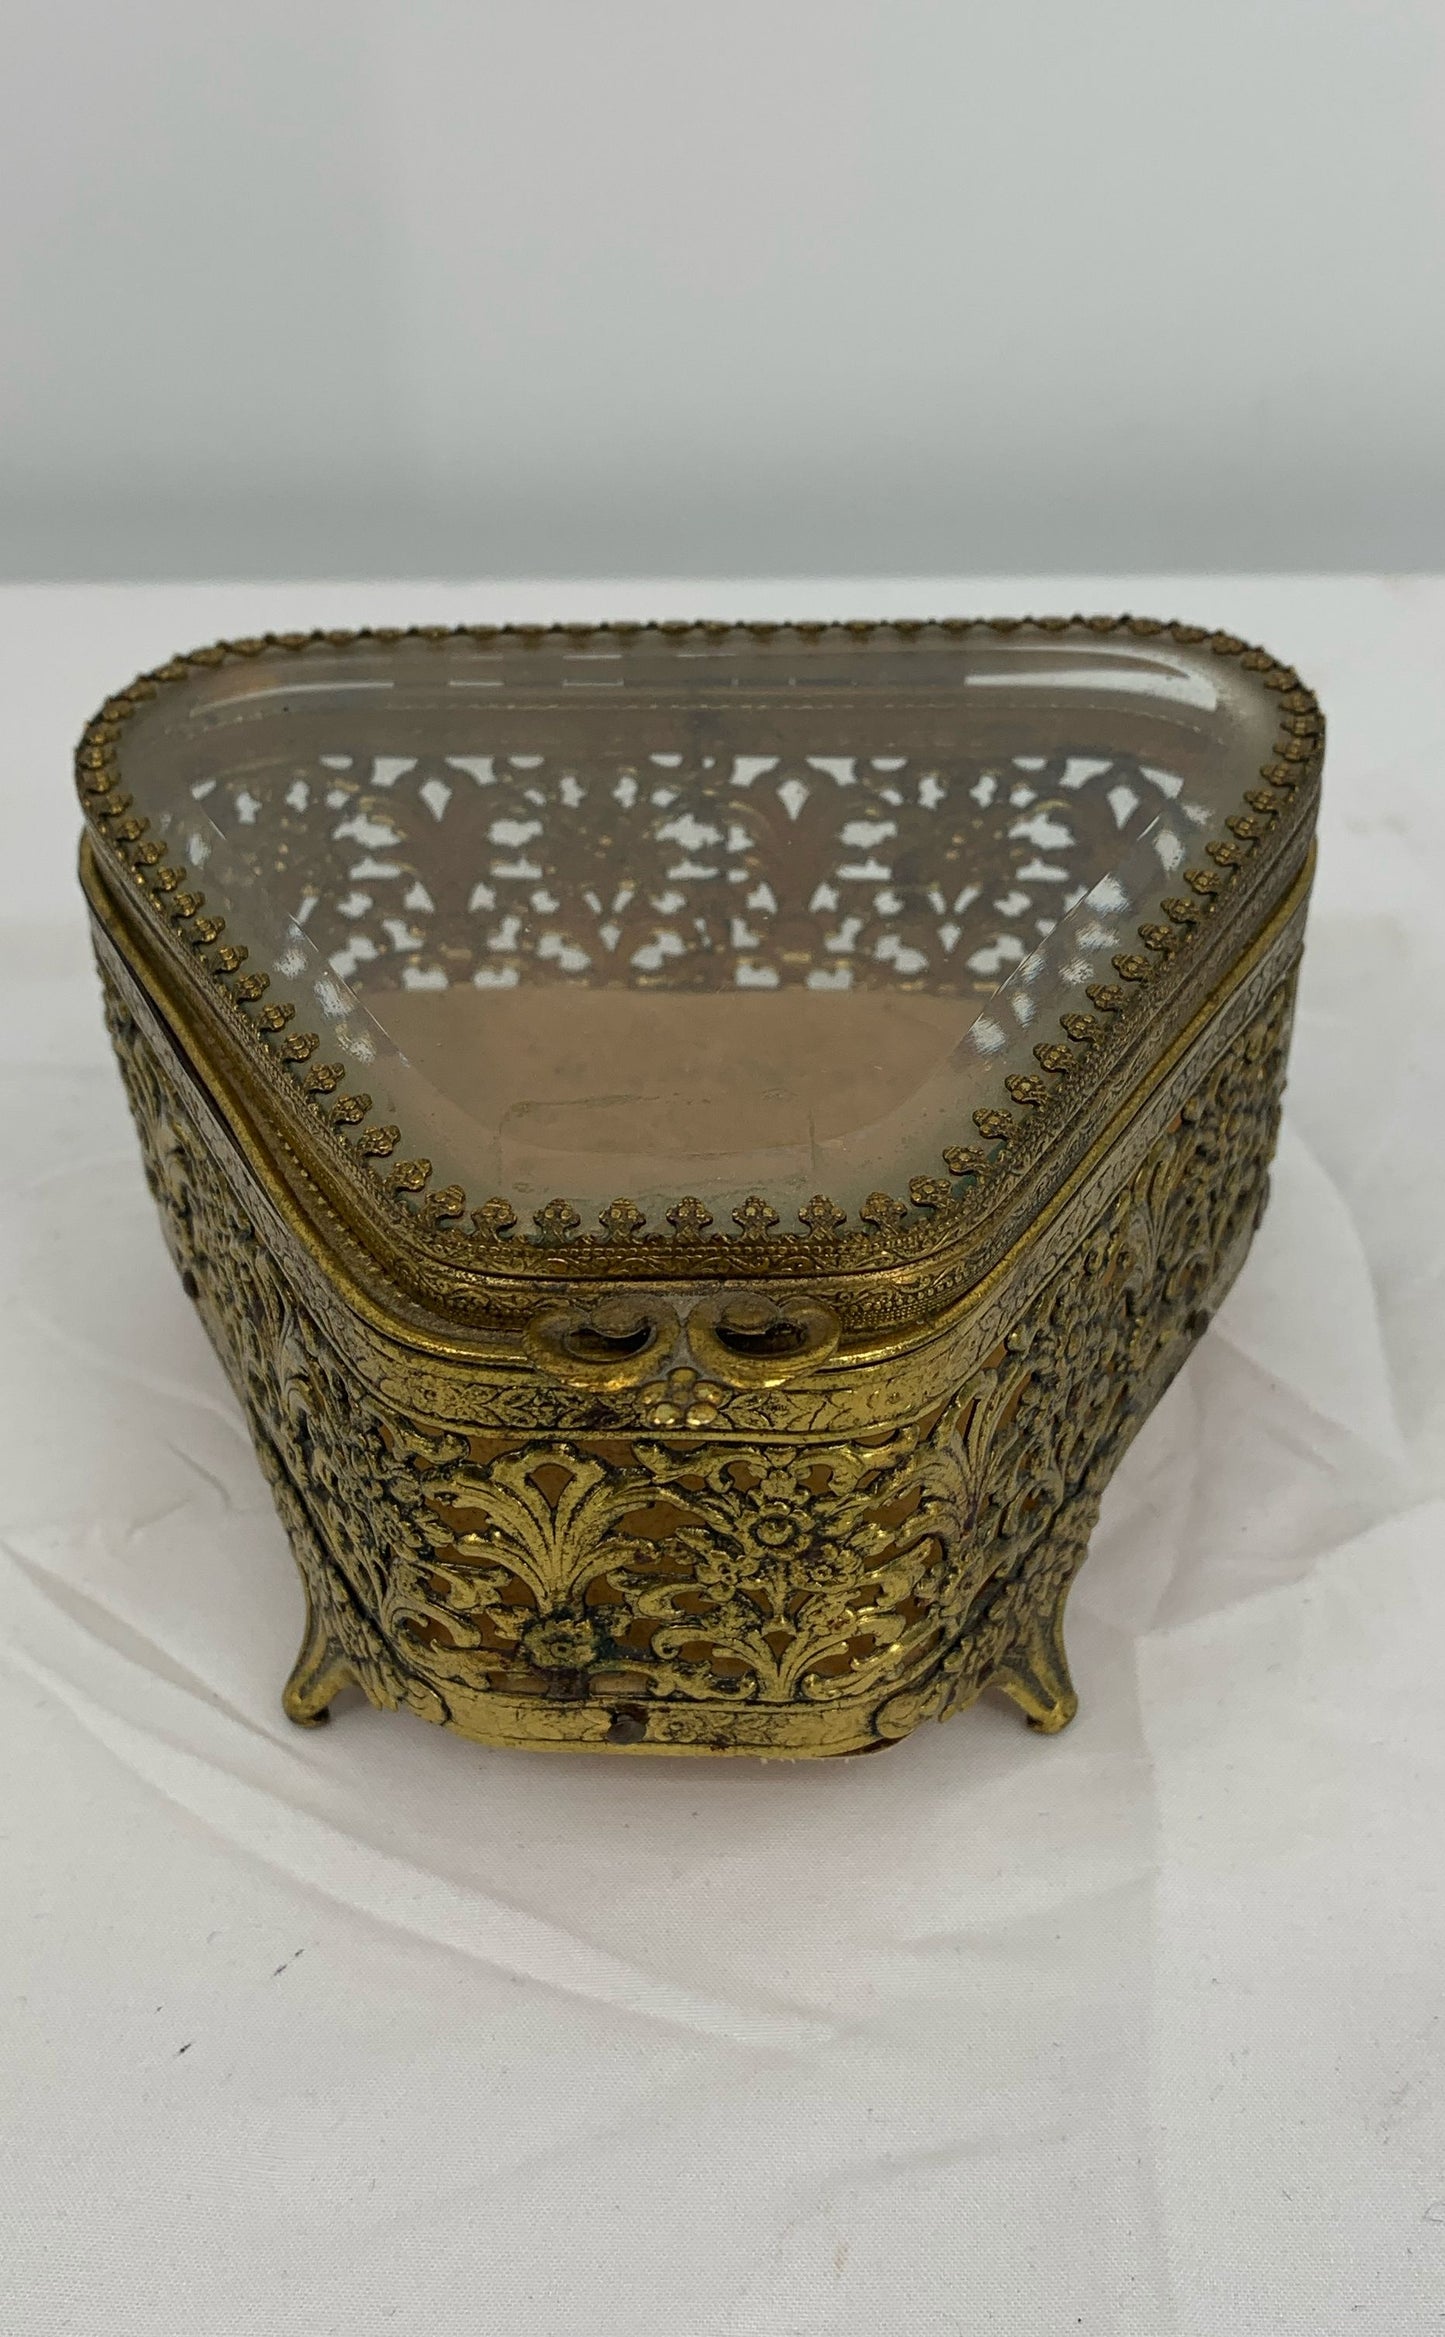 Antique Gold Ornate Ormulu Jewelry Box With Lid Velvet Interior 5x5x3"